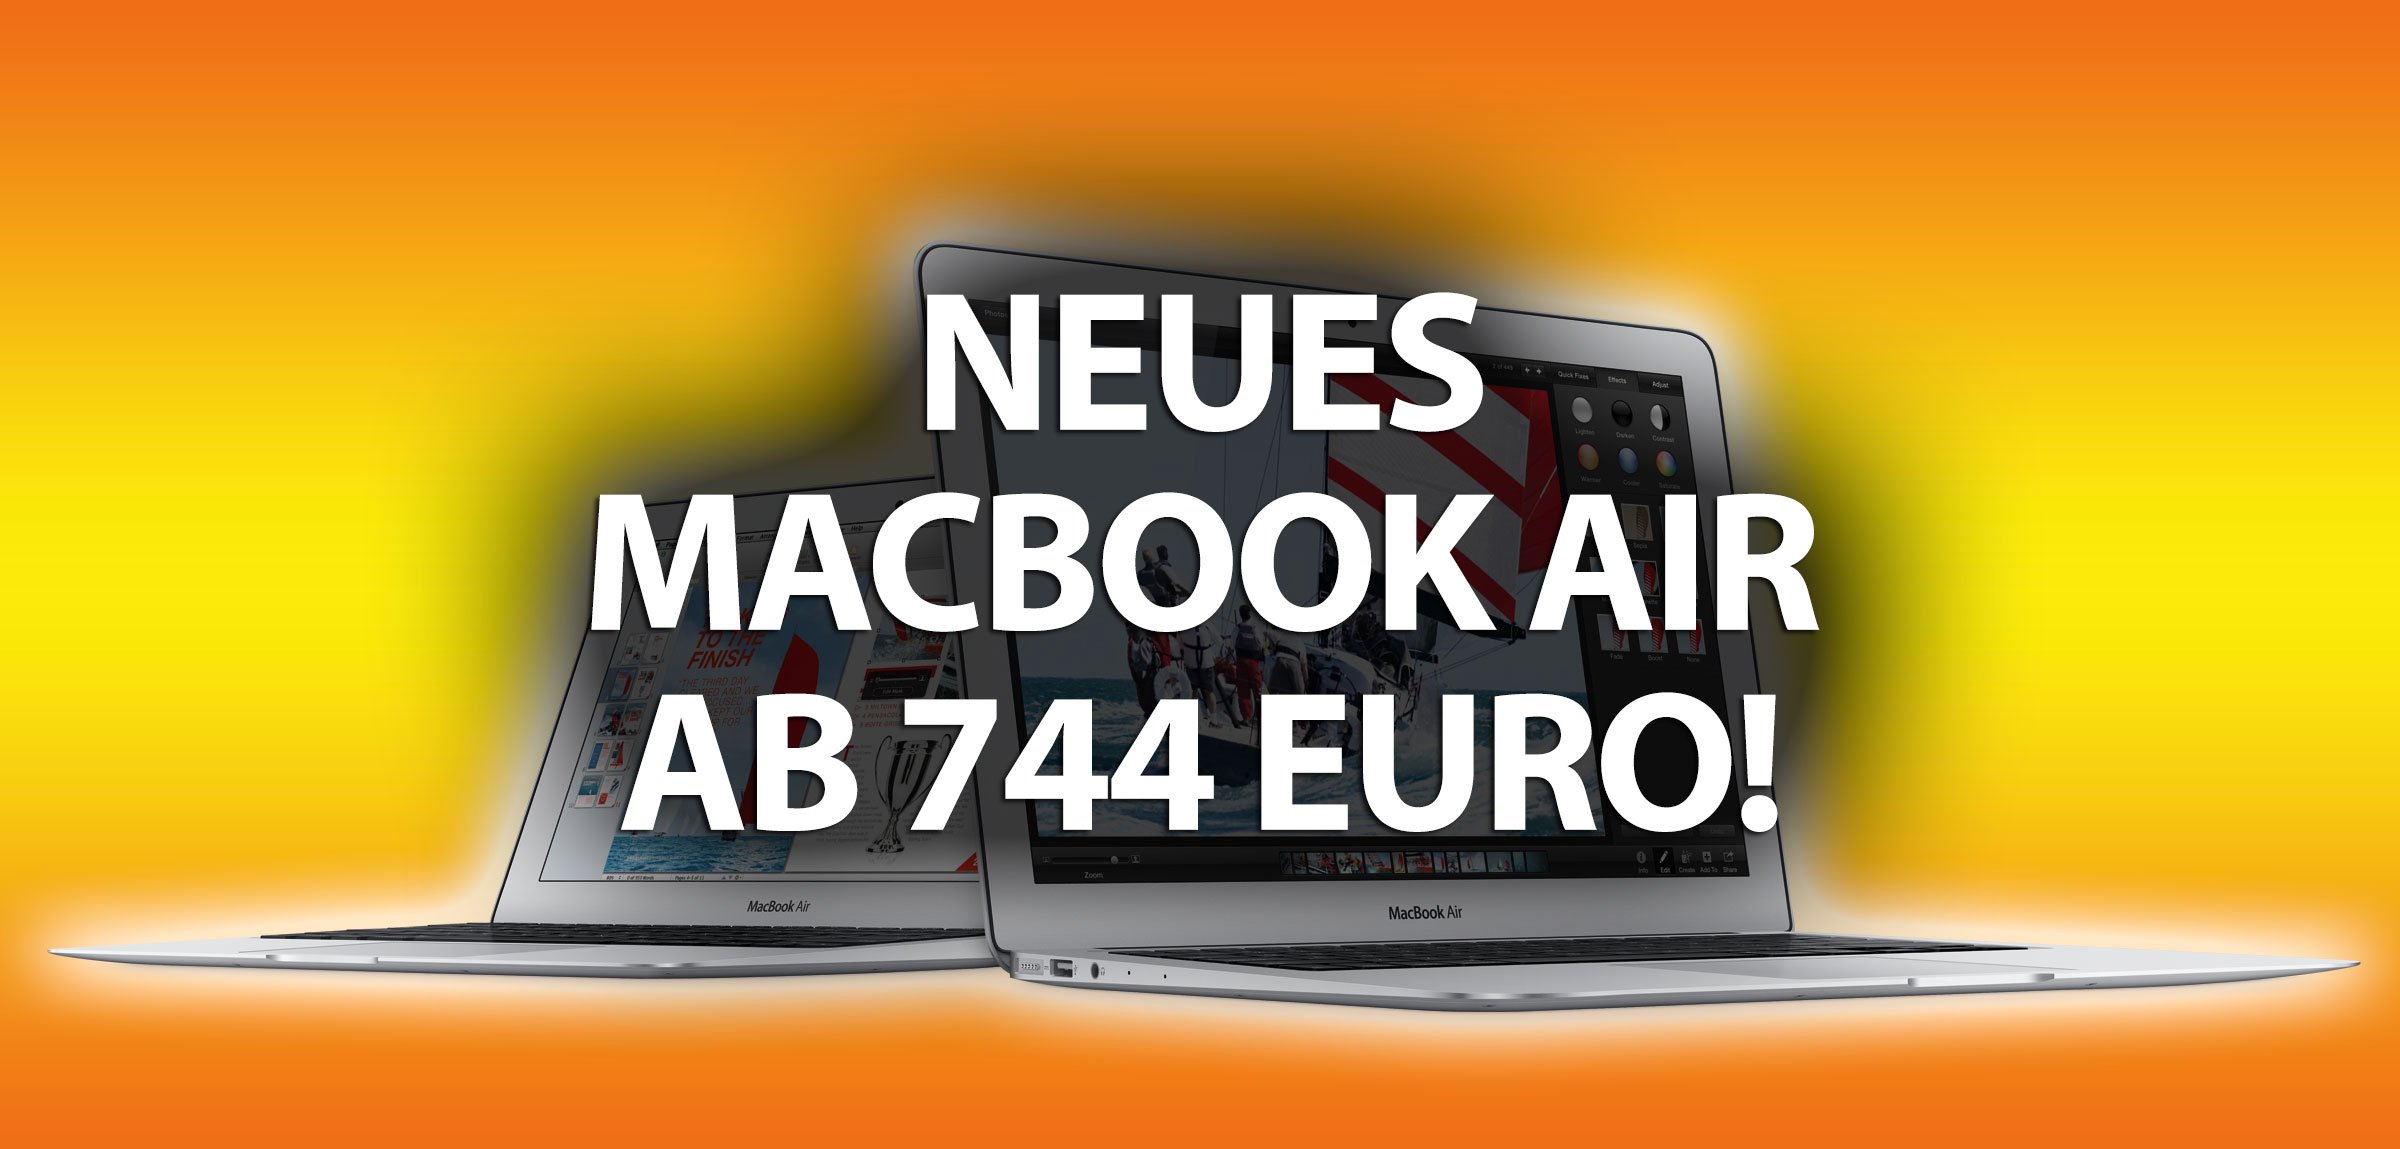 Neuer Rabattcode für Macbook Air 2014: Bester Preis! (Update: Studenten-Rabatt) 7